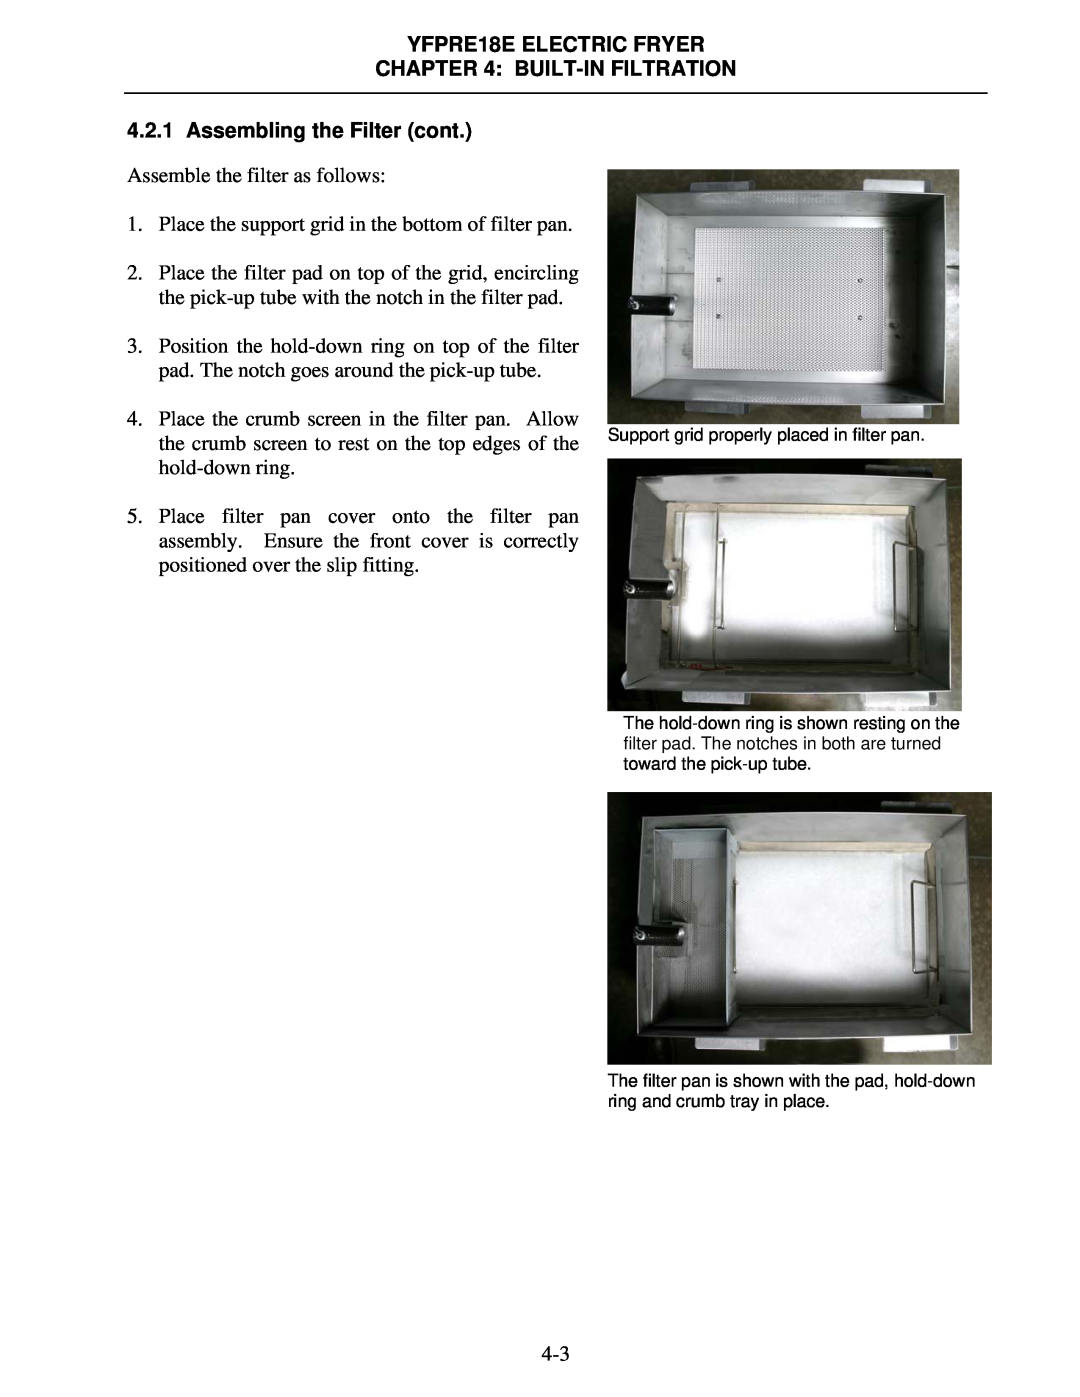 Frymaster YFPRE1817E operation manual Assemble the filter as follows 